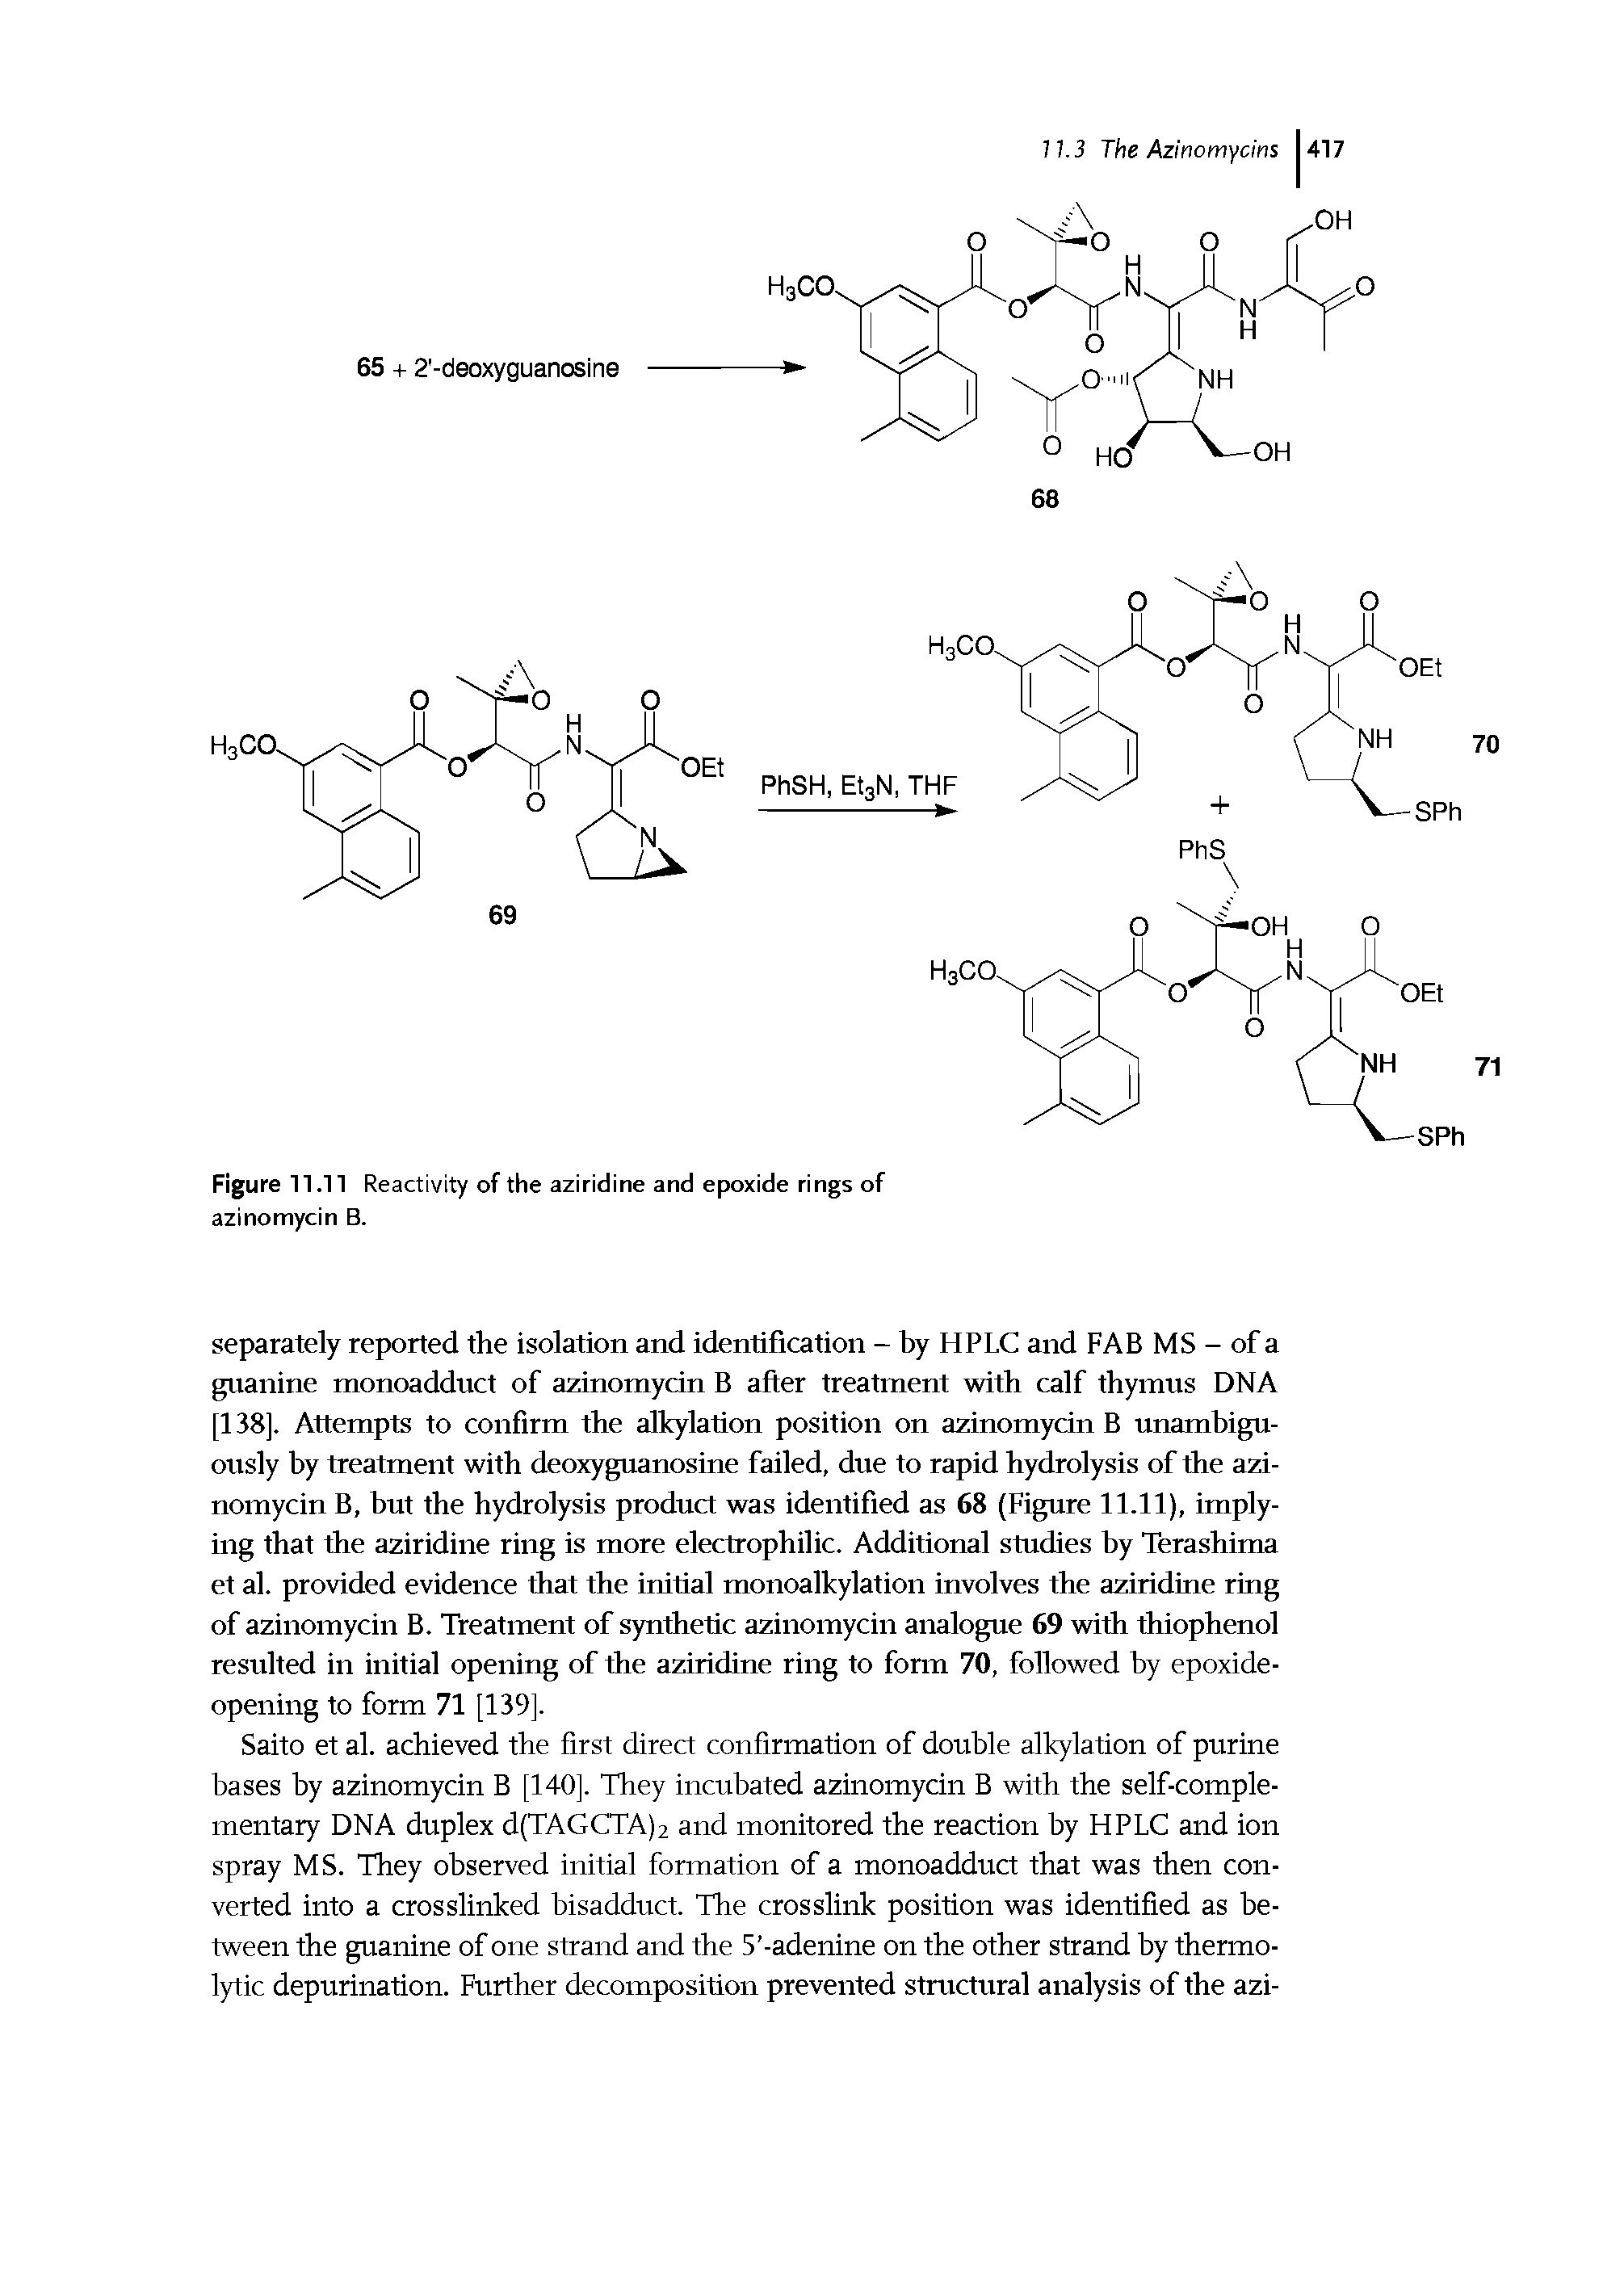 Figure 11.11 Reactivity of the aziridine and epoxide rings of azinomycin B.